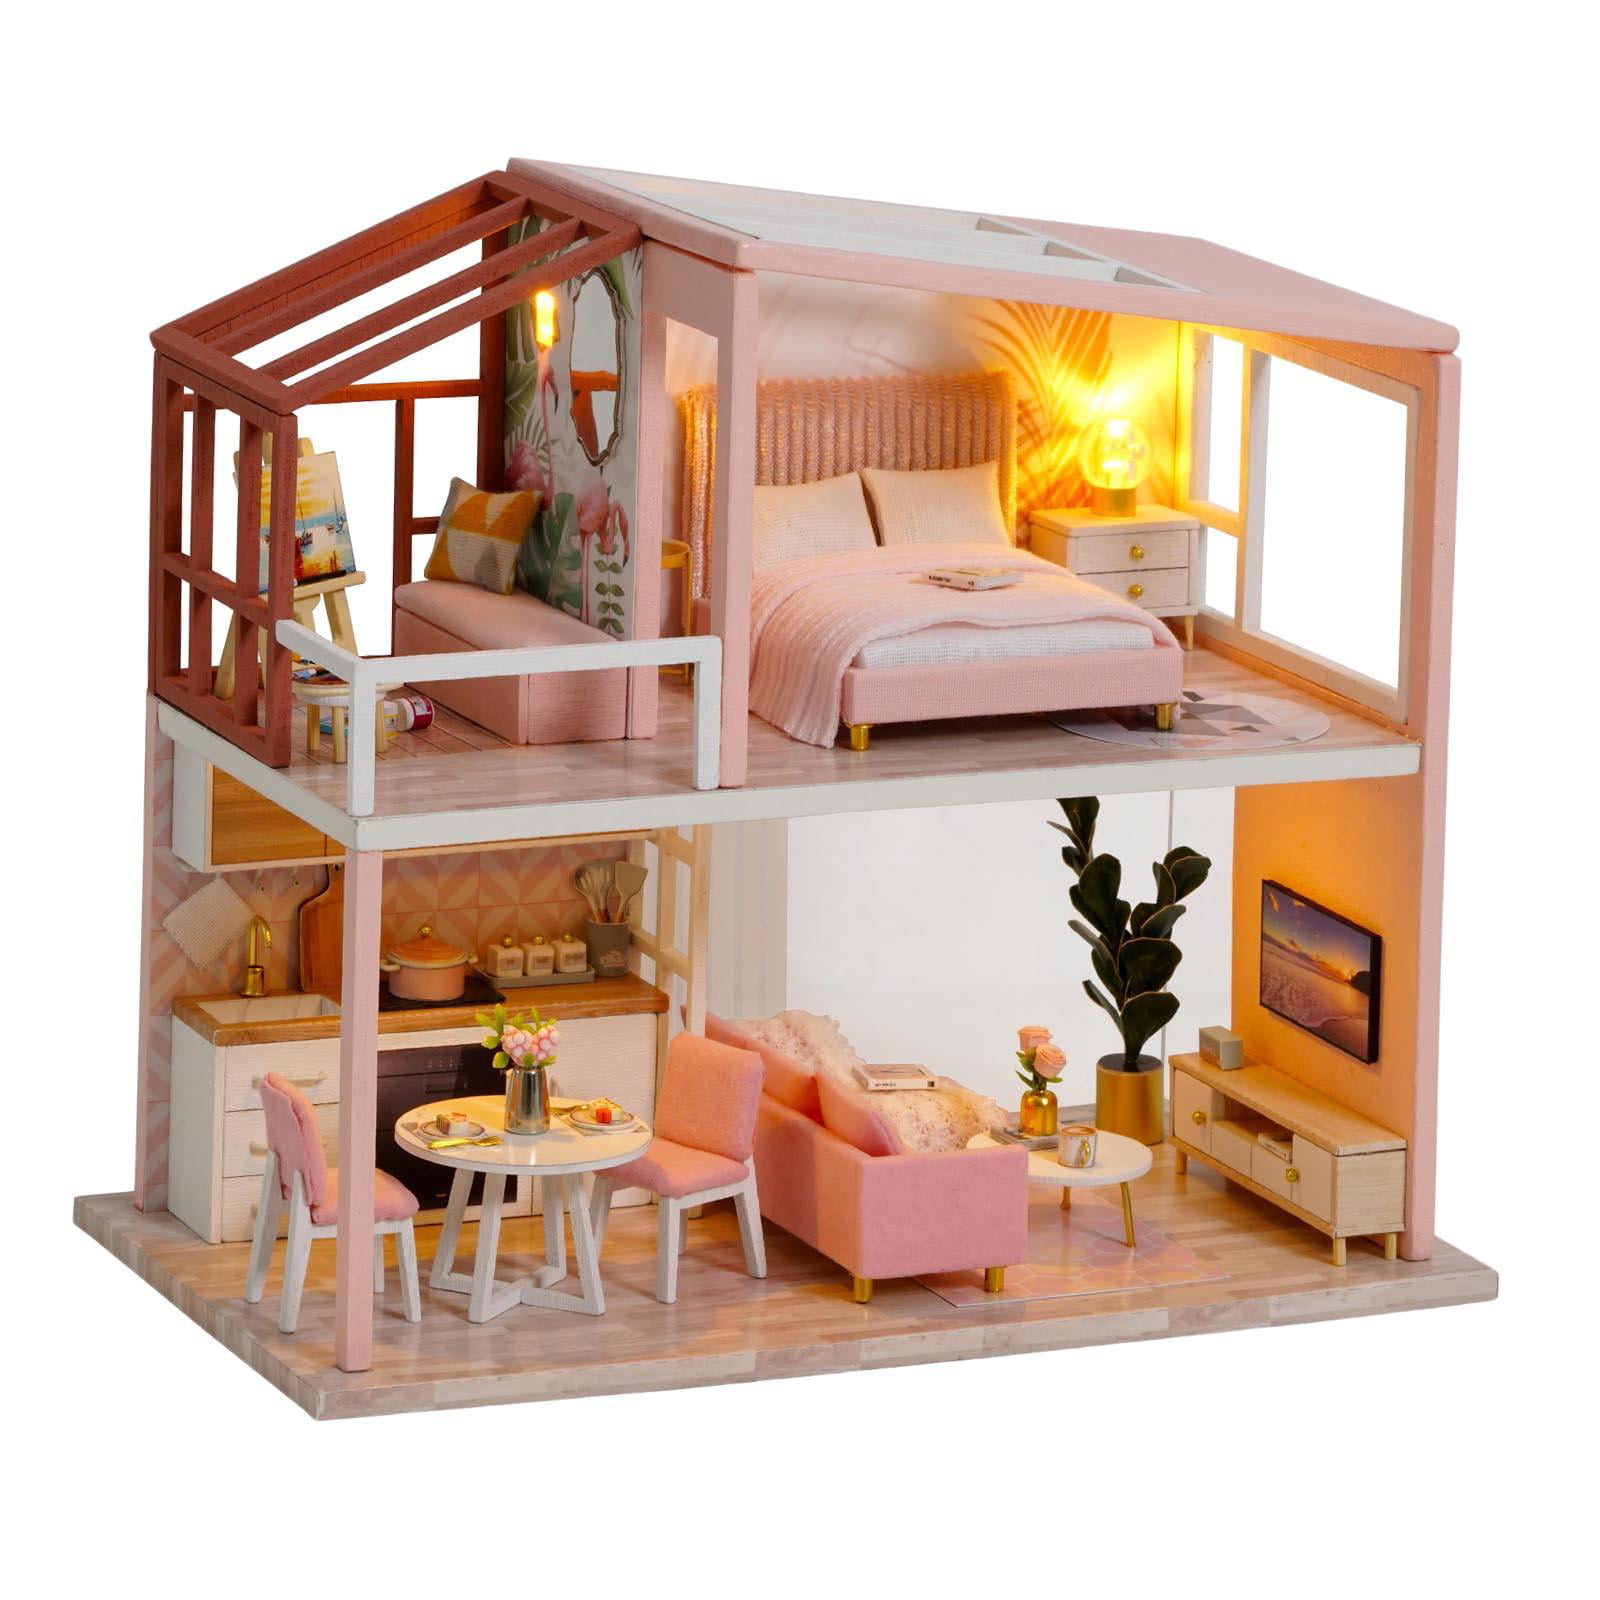 1/24 DIY Doll House Wooden Doll Houses Miniature Dollhouse Furniture Kit Toys 